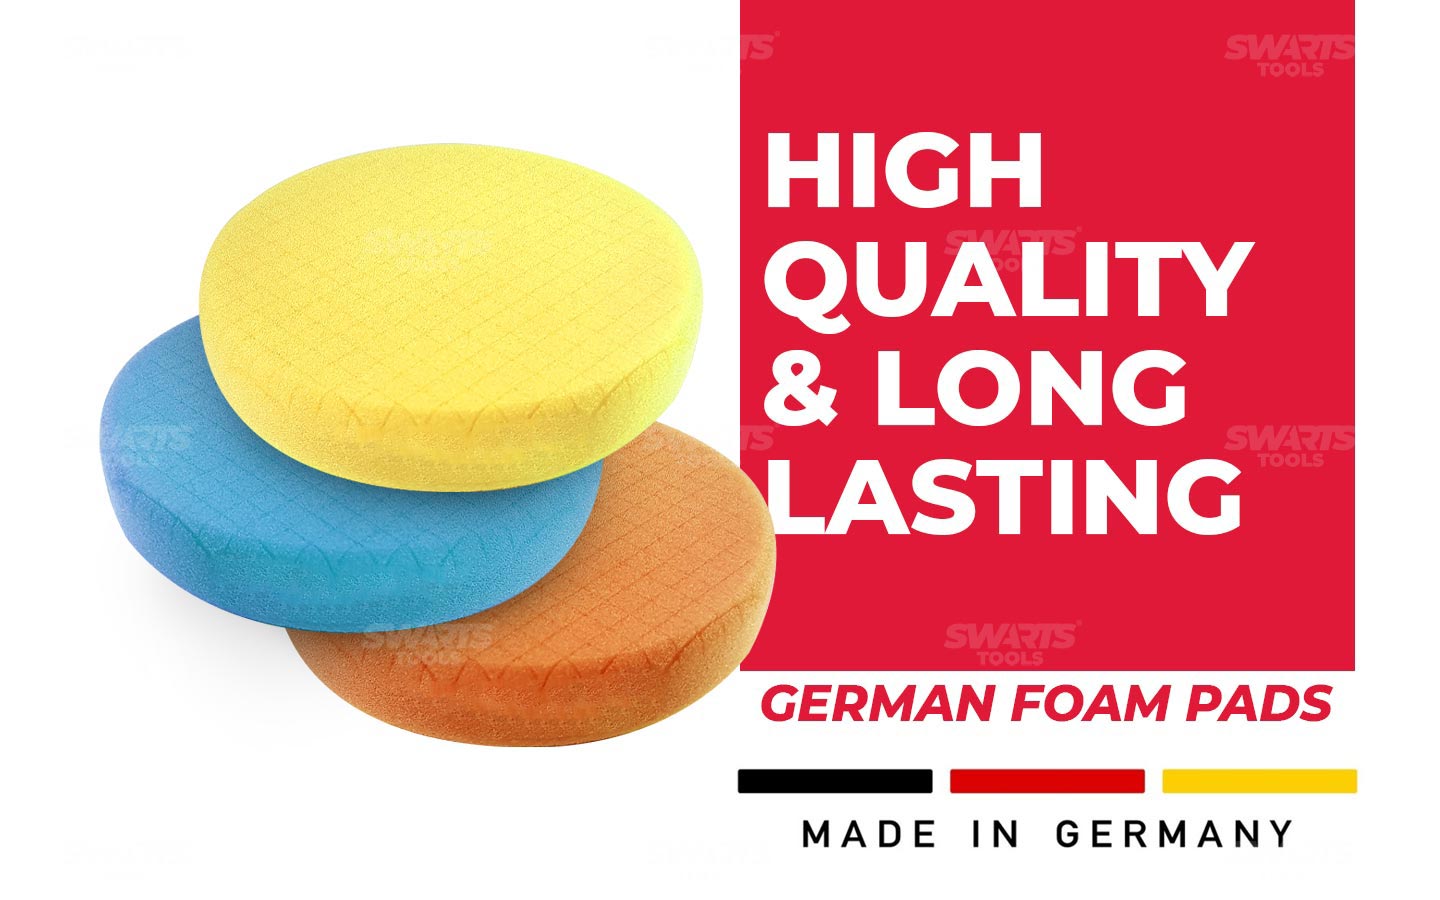 High quality & long lasting german foam pads